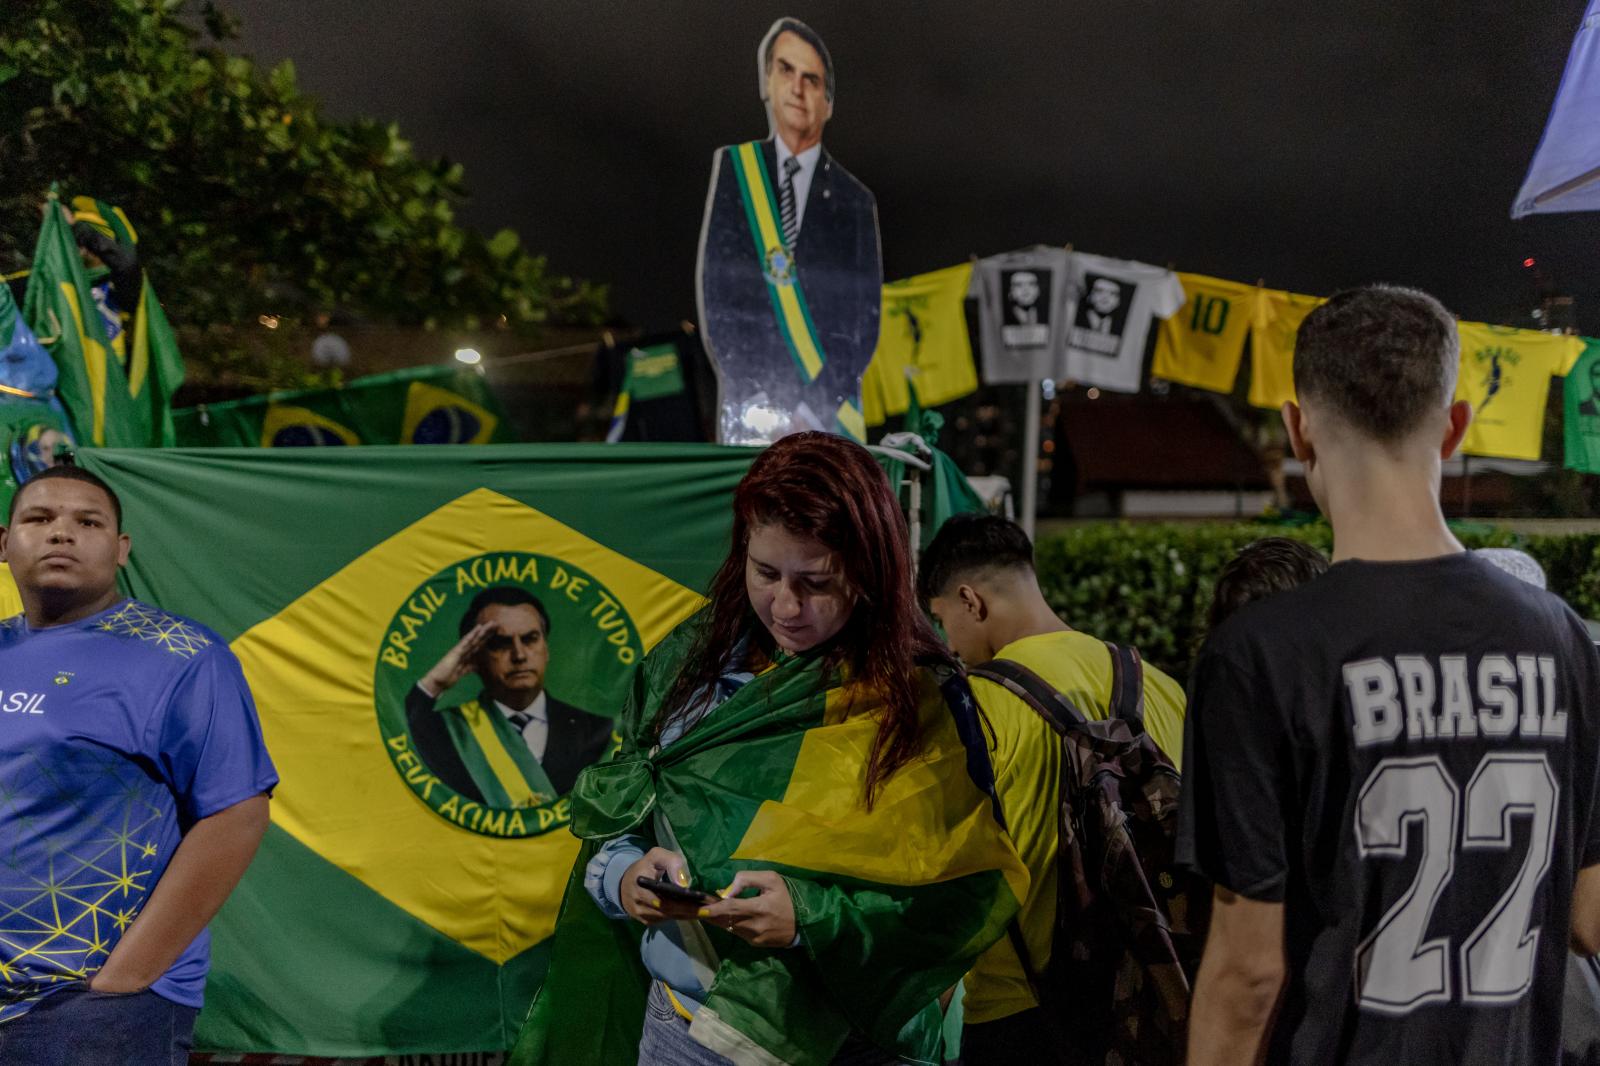 Bolsonaro supporters gather in ...rrellaga for The New York Times